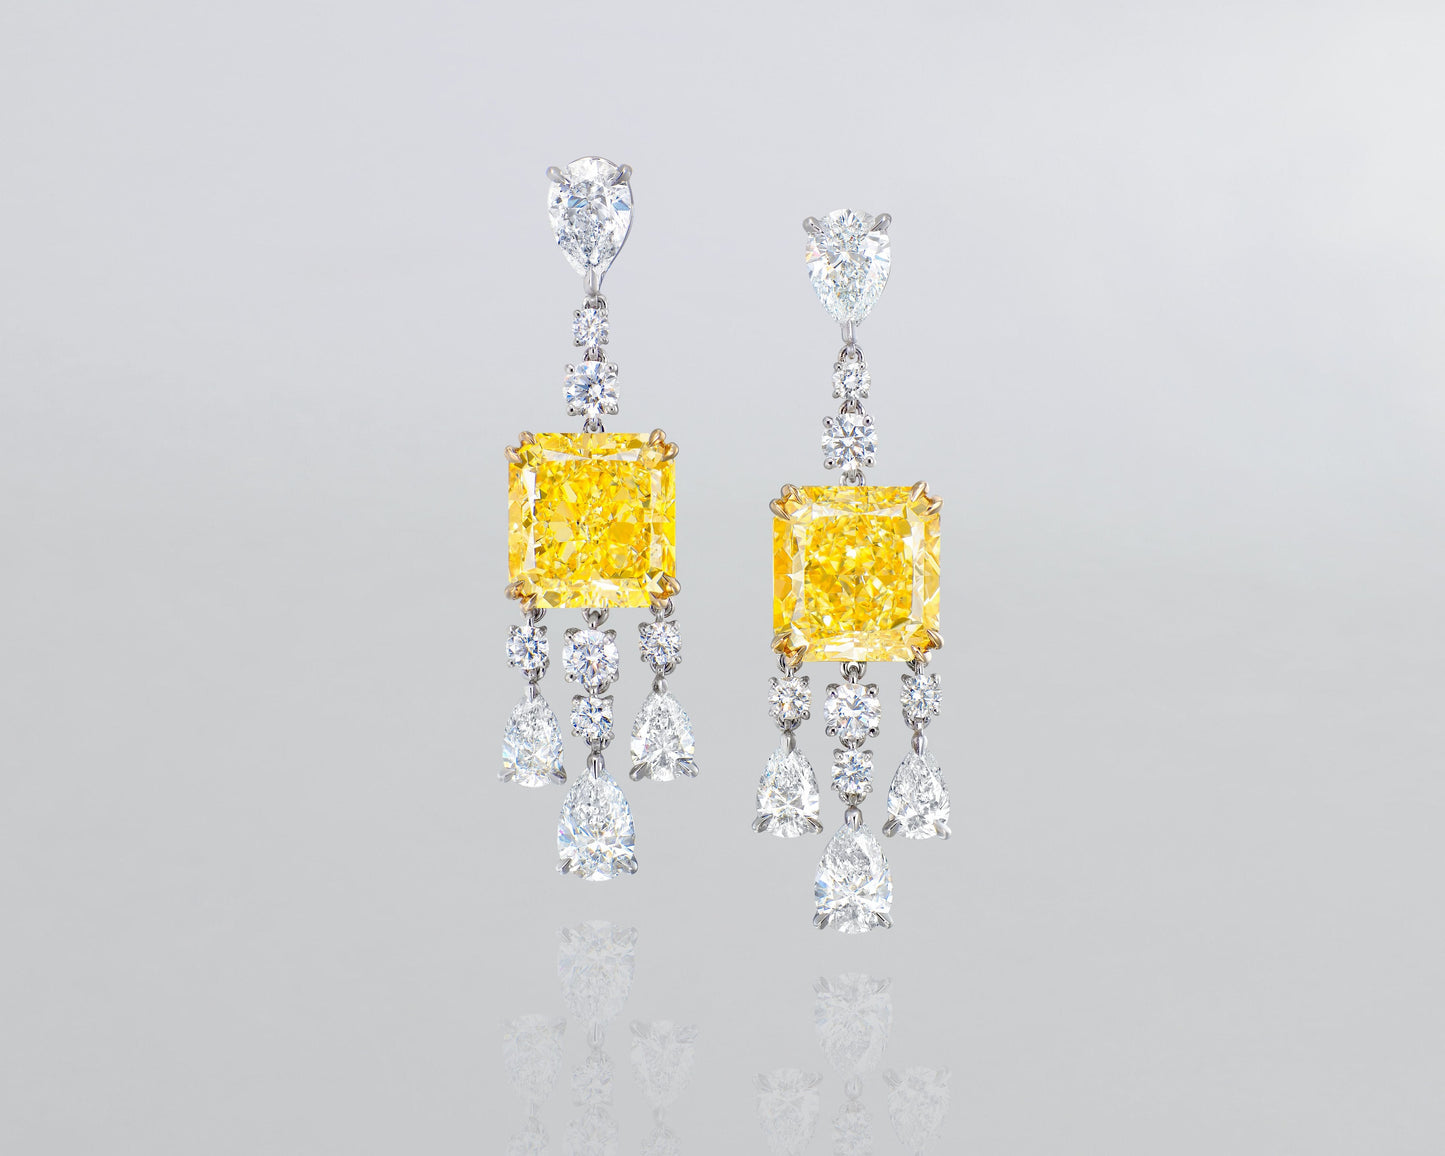 9.74 carat Radiant Cut Fancy Yellow and White Diamond Earrings